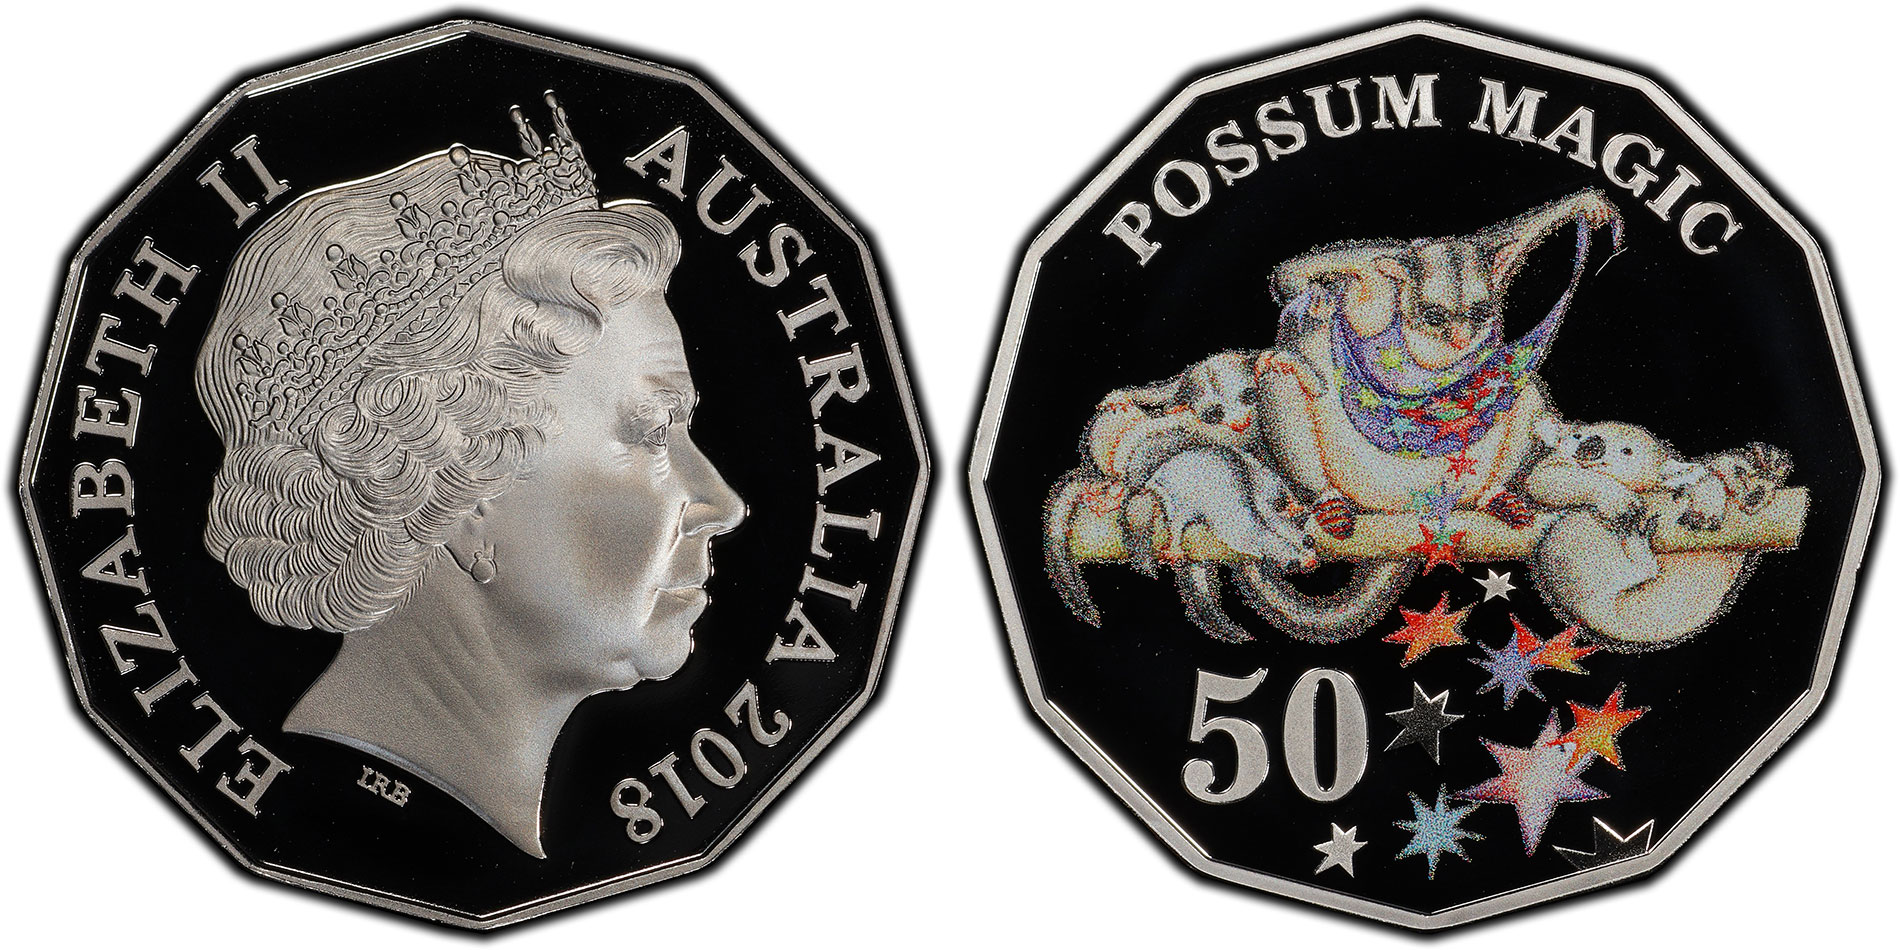 2017 Possum Magic 7 Coin Set $2 $1 Dollar & 1 Cent Collection Australia 